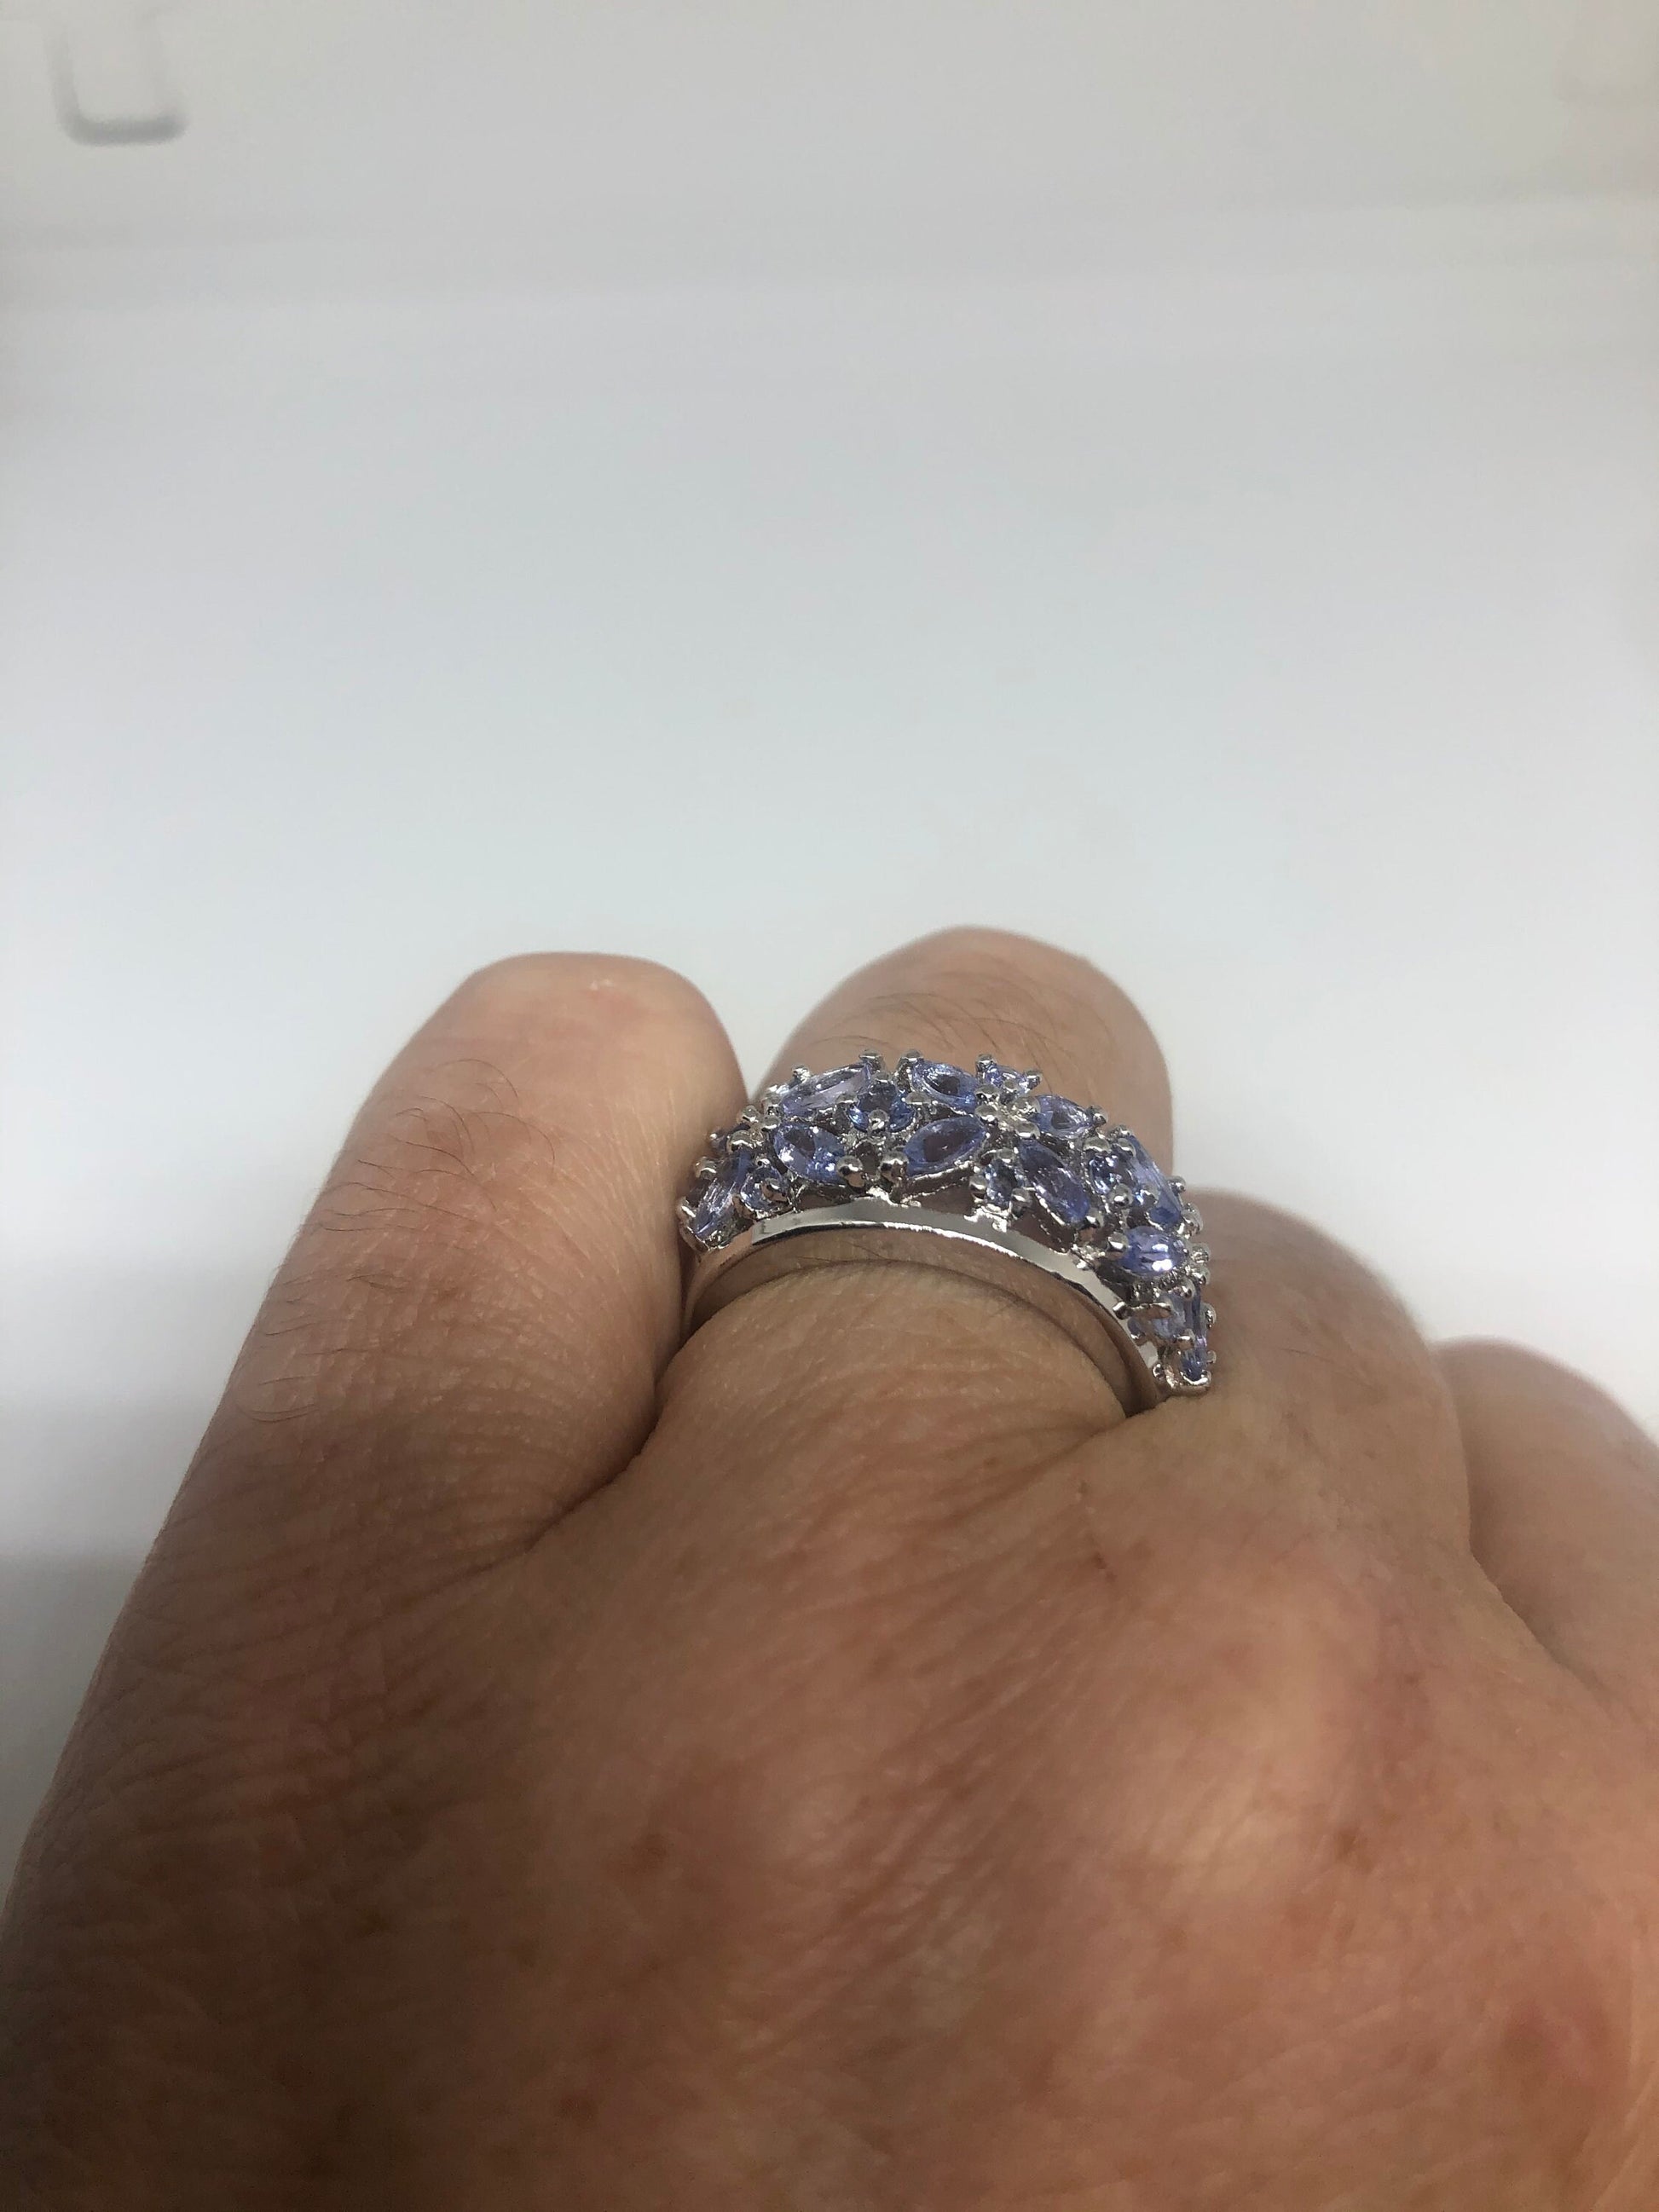 Vintage Blue Tanzanite Ring 925 Sterling Silver Size 6